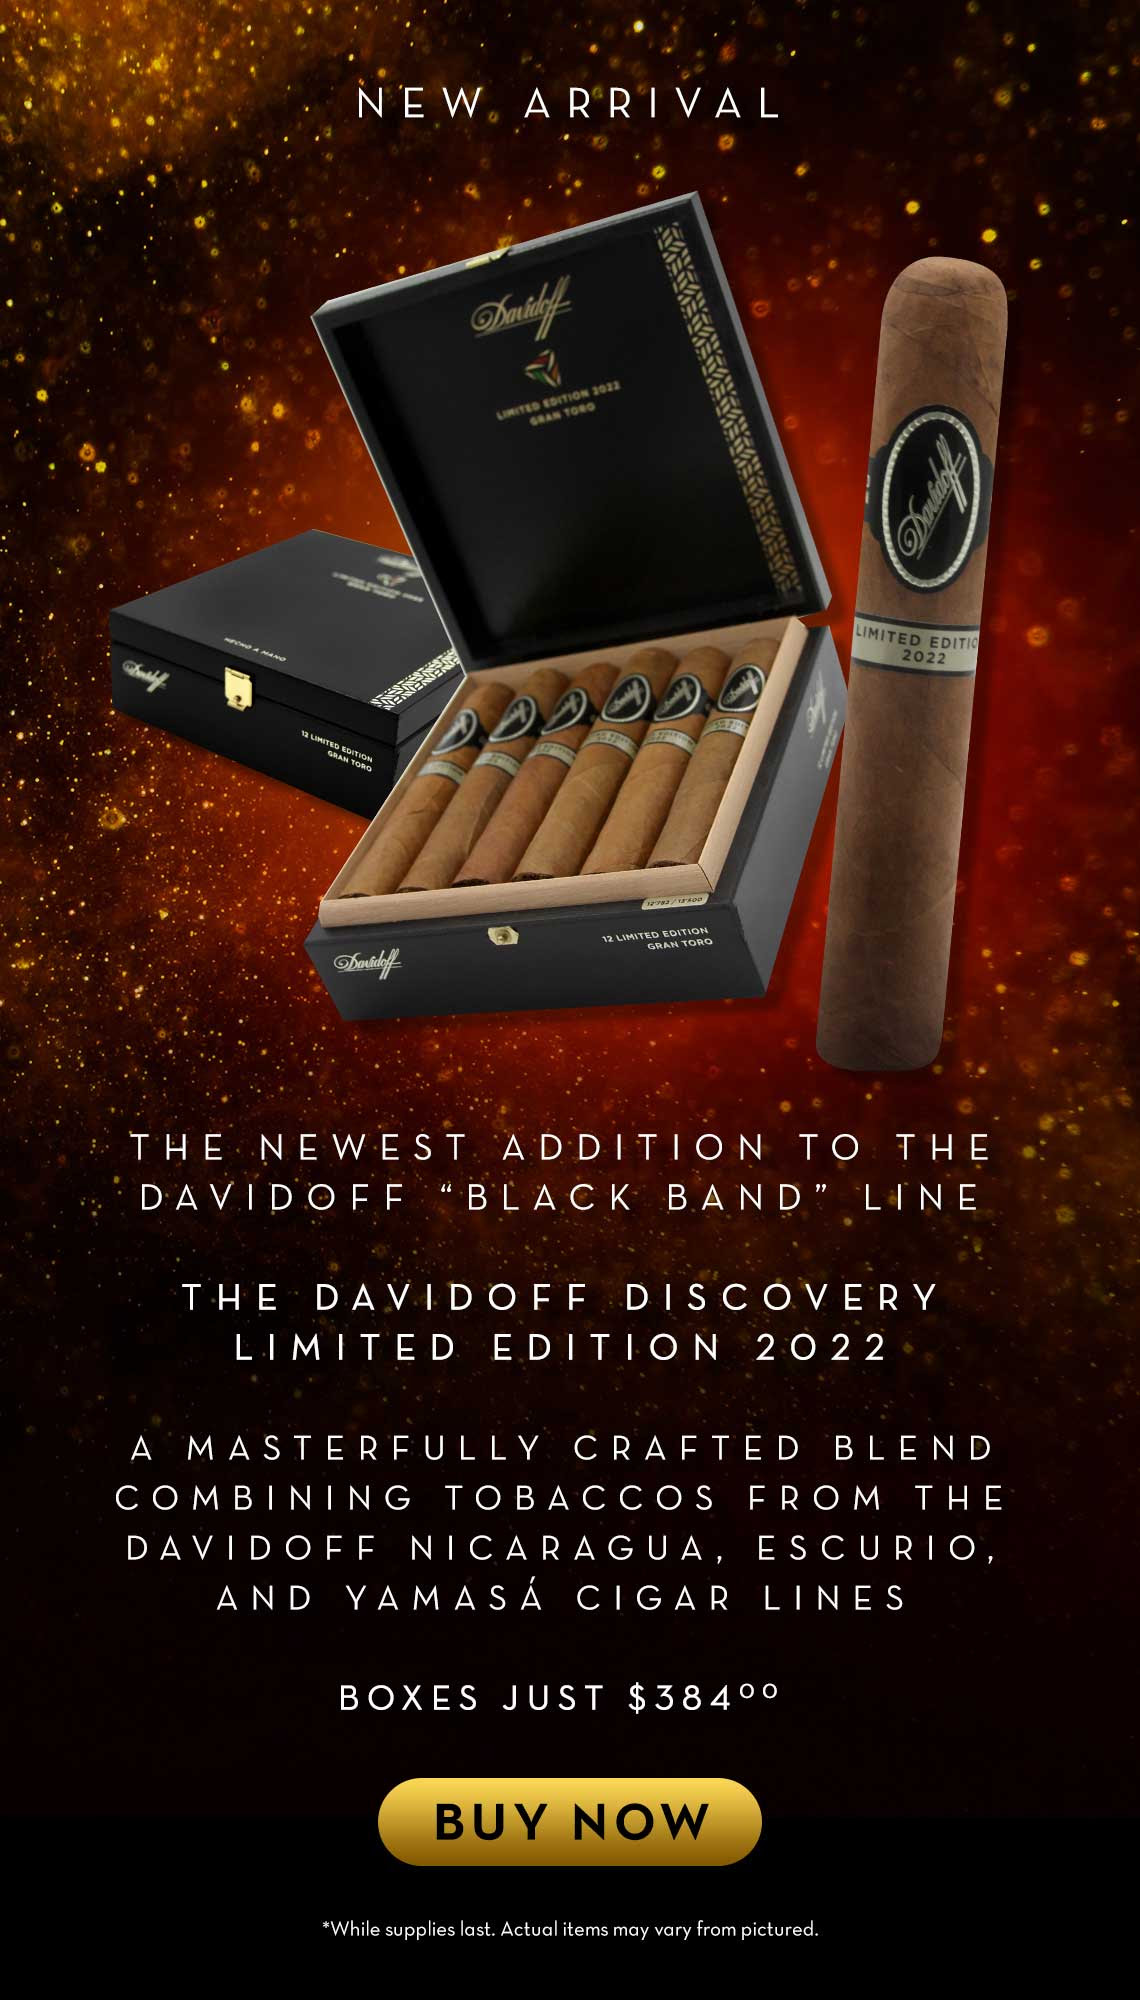 Davidoff Discovery Limited Edition 2022